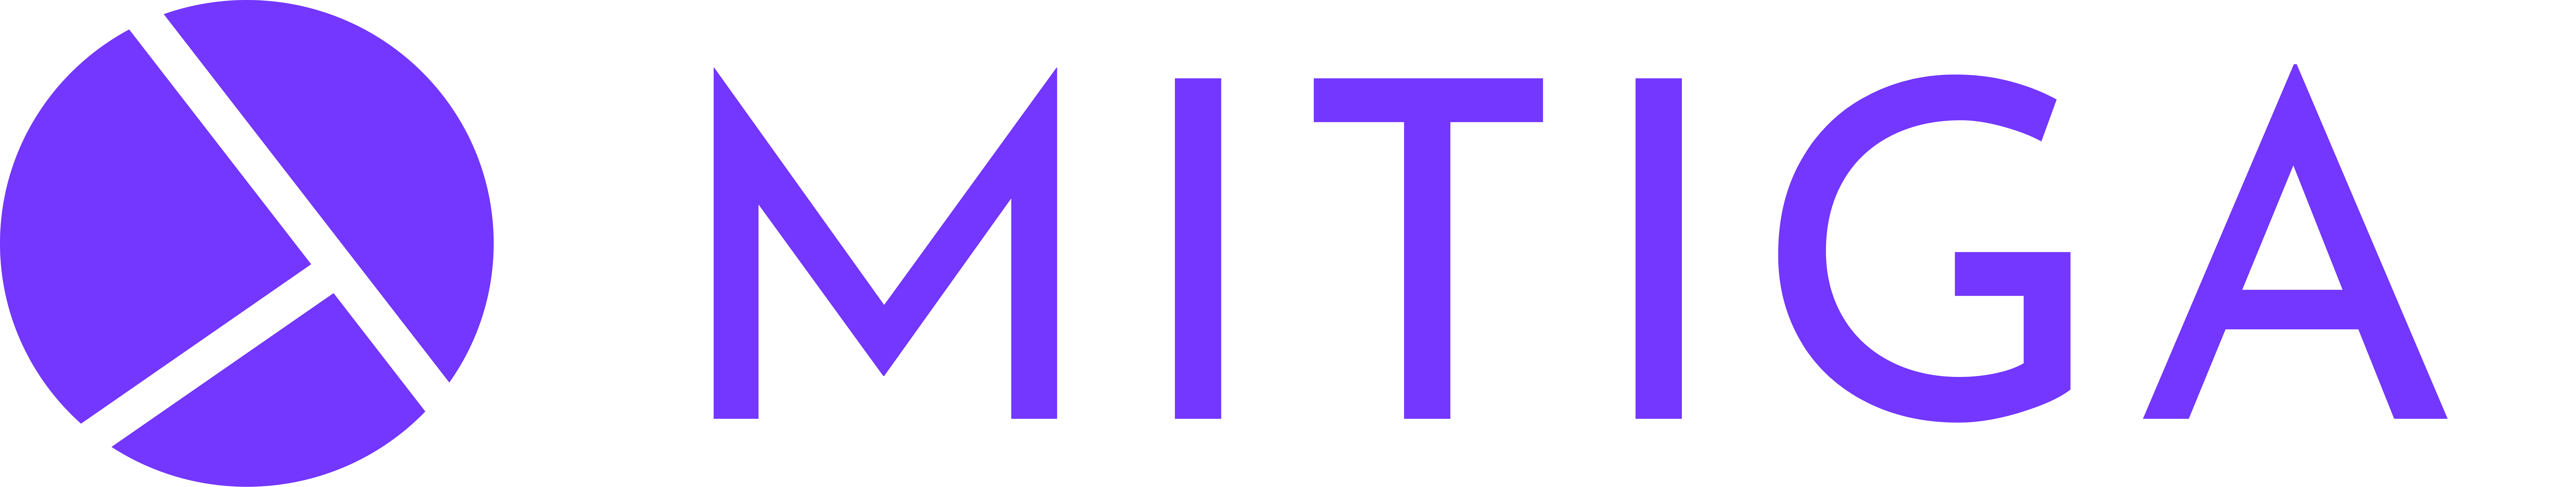 `Mitiga blue logo`